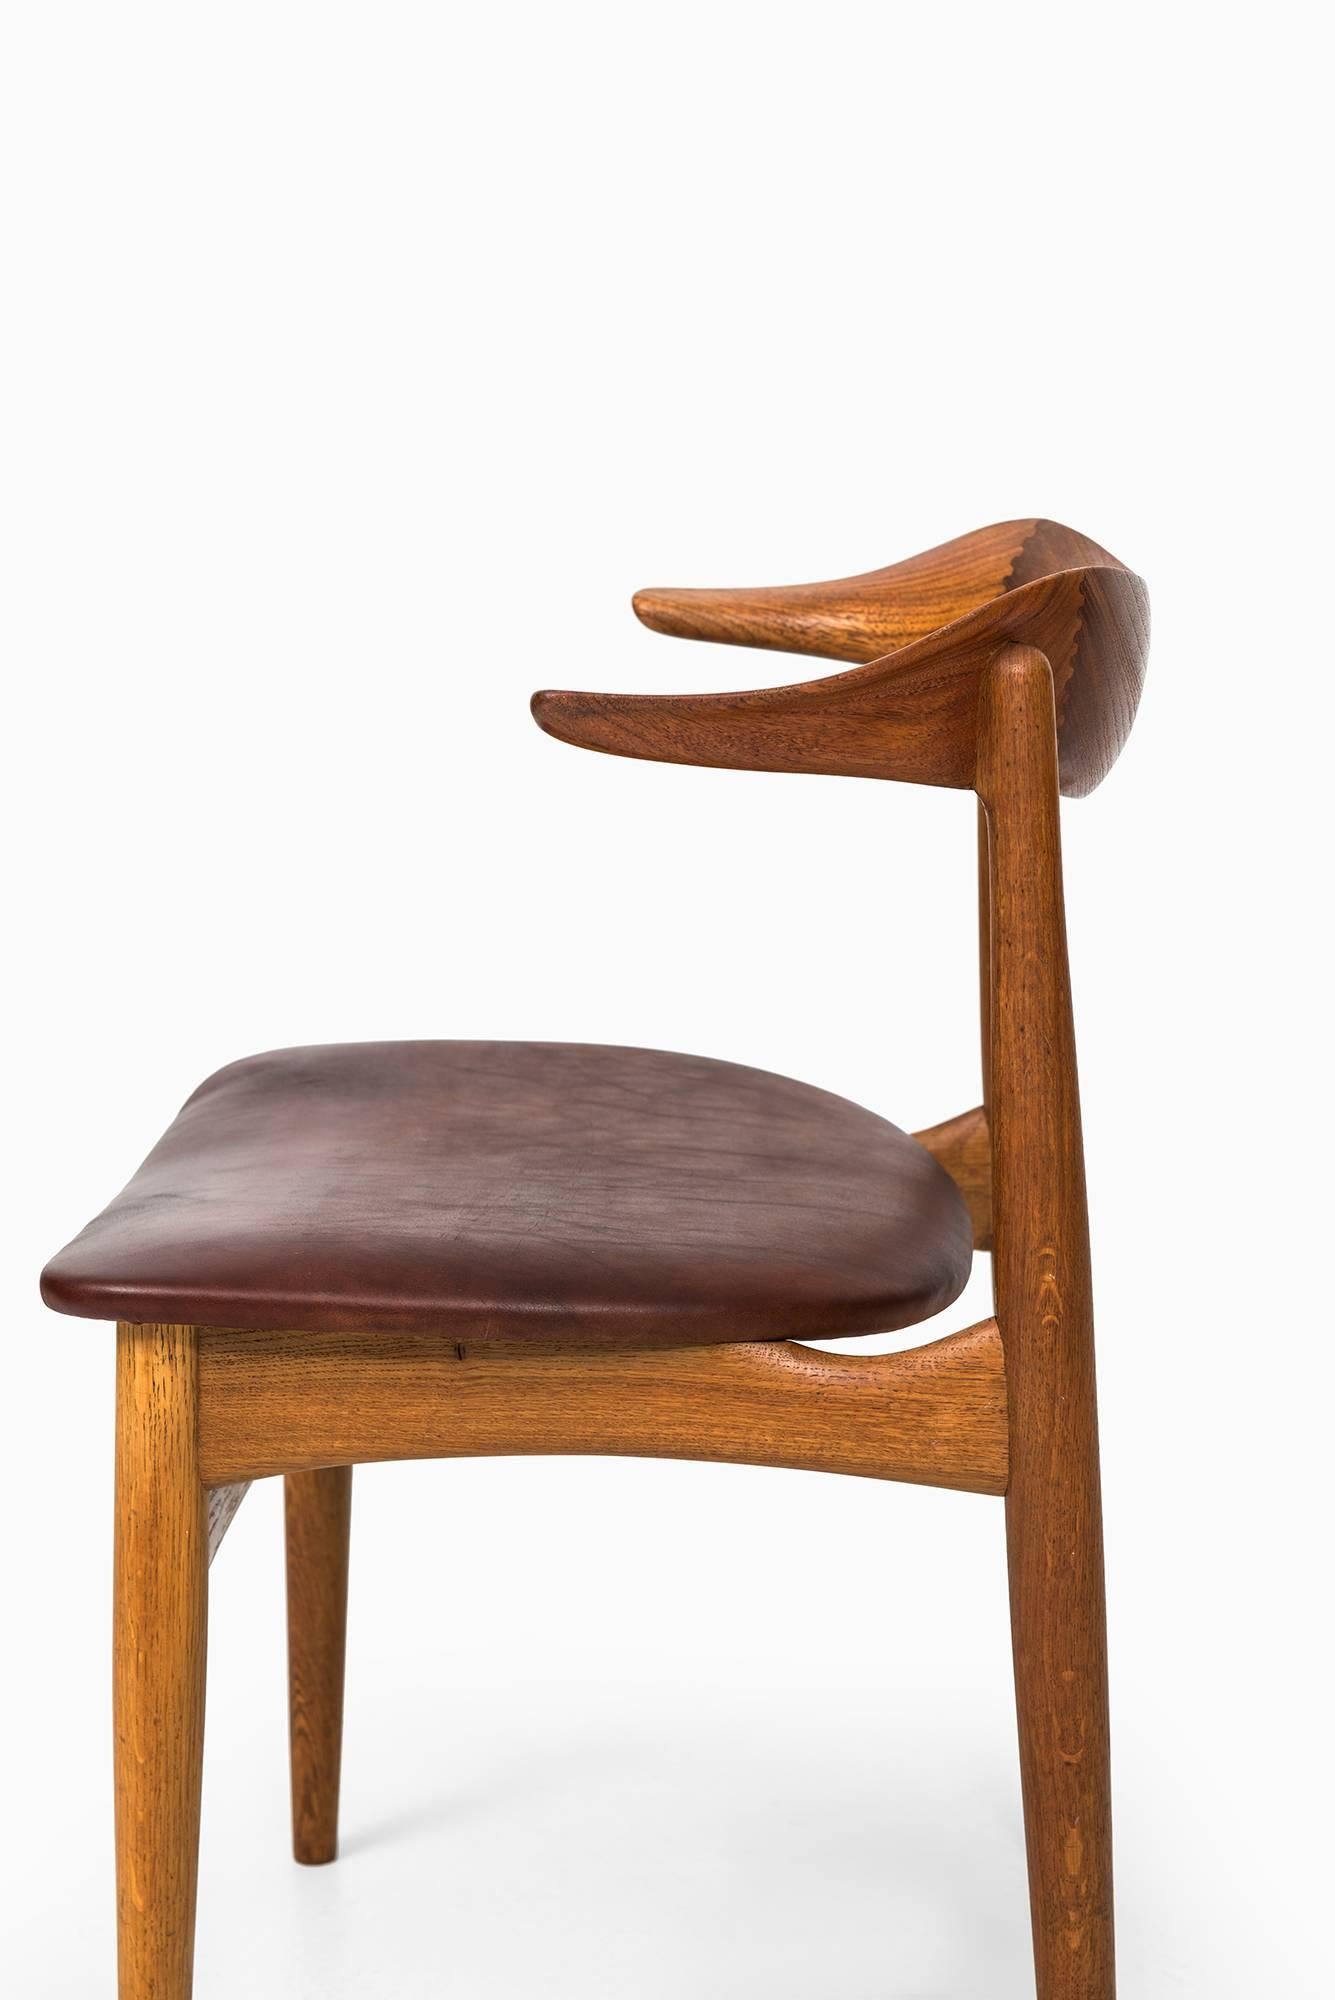 Rare chair model SM 521/cowhorn chair designed by Knud Færch. Produced by Slagelse møbelfabrik in Denmark.